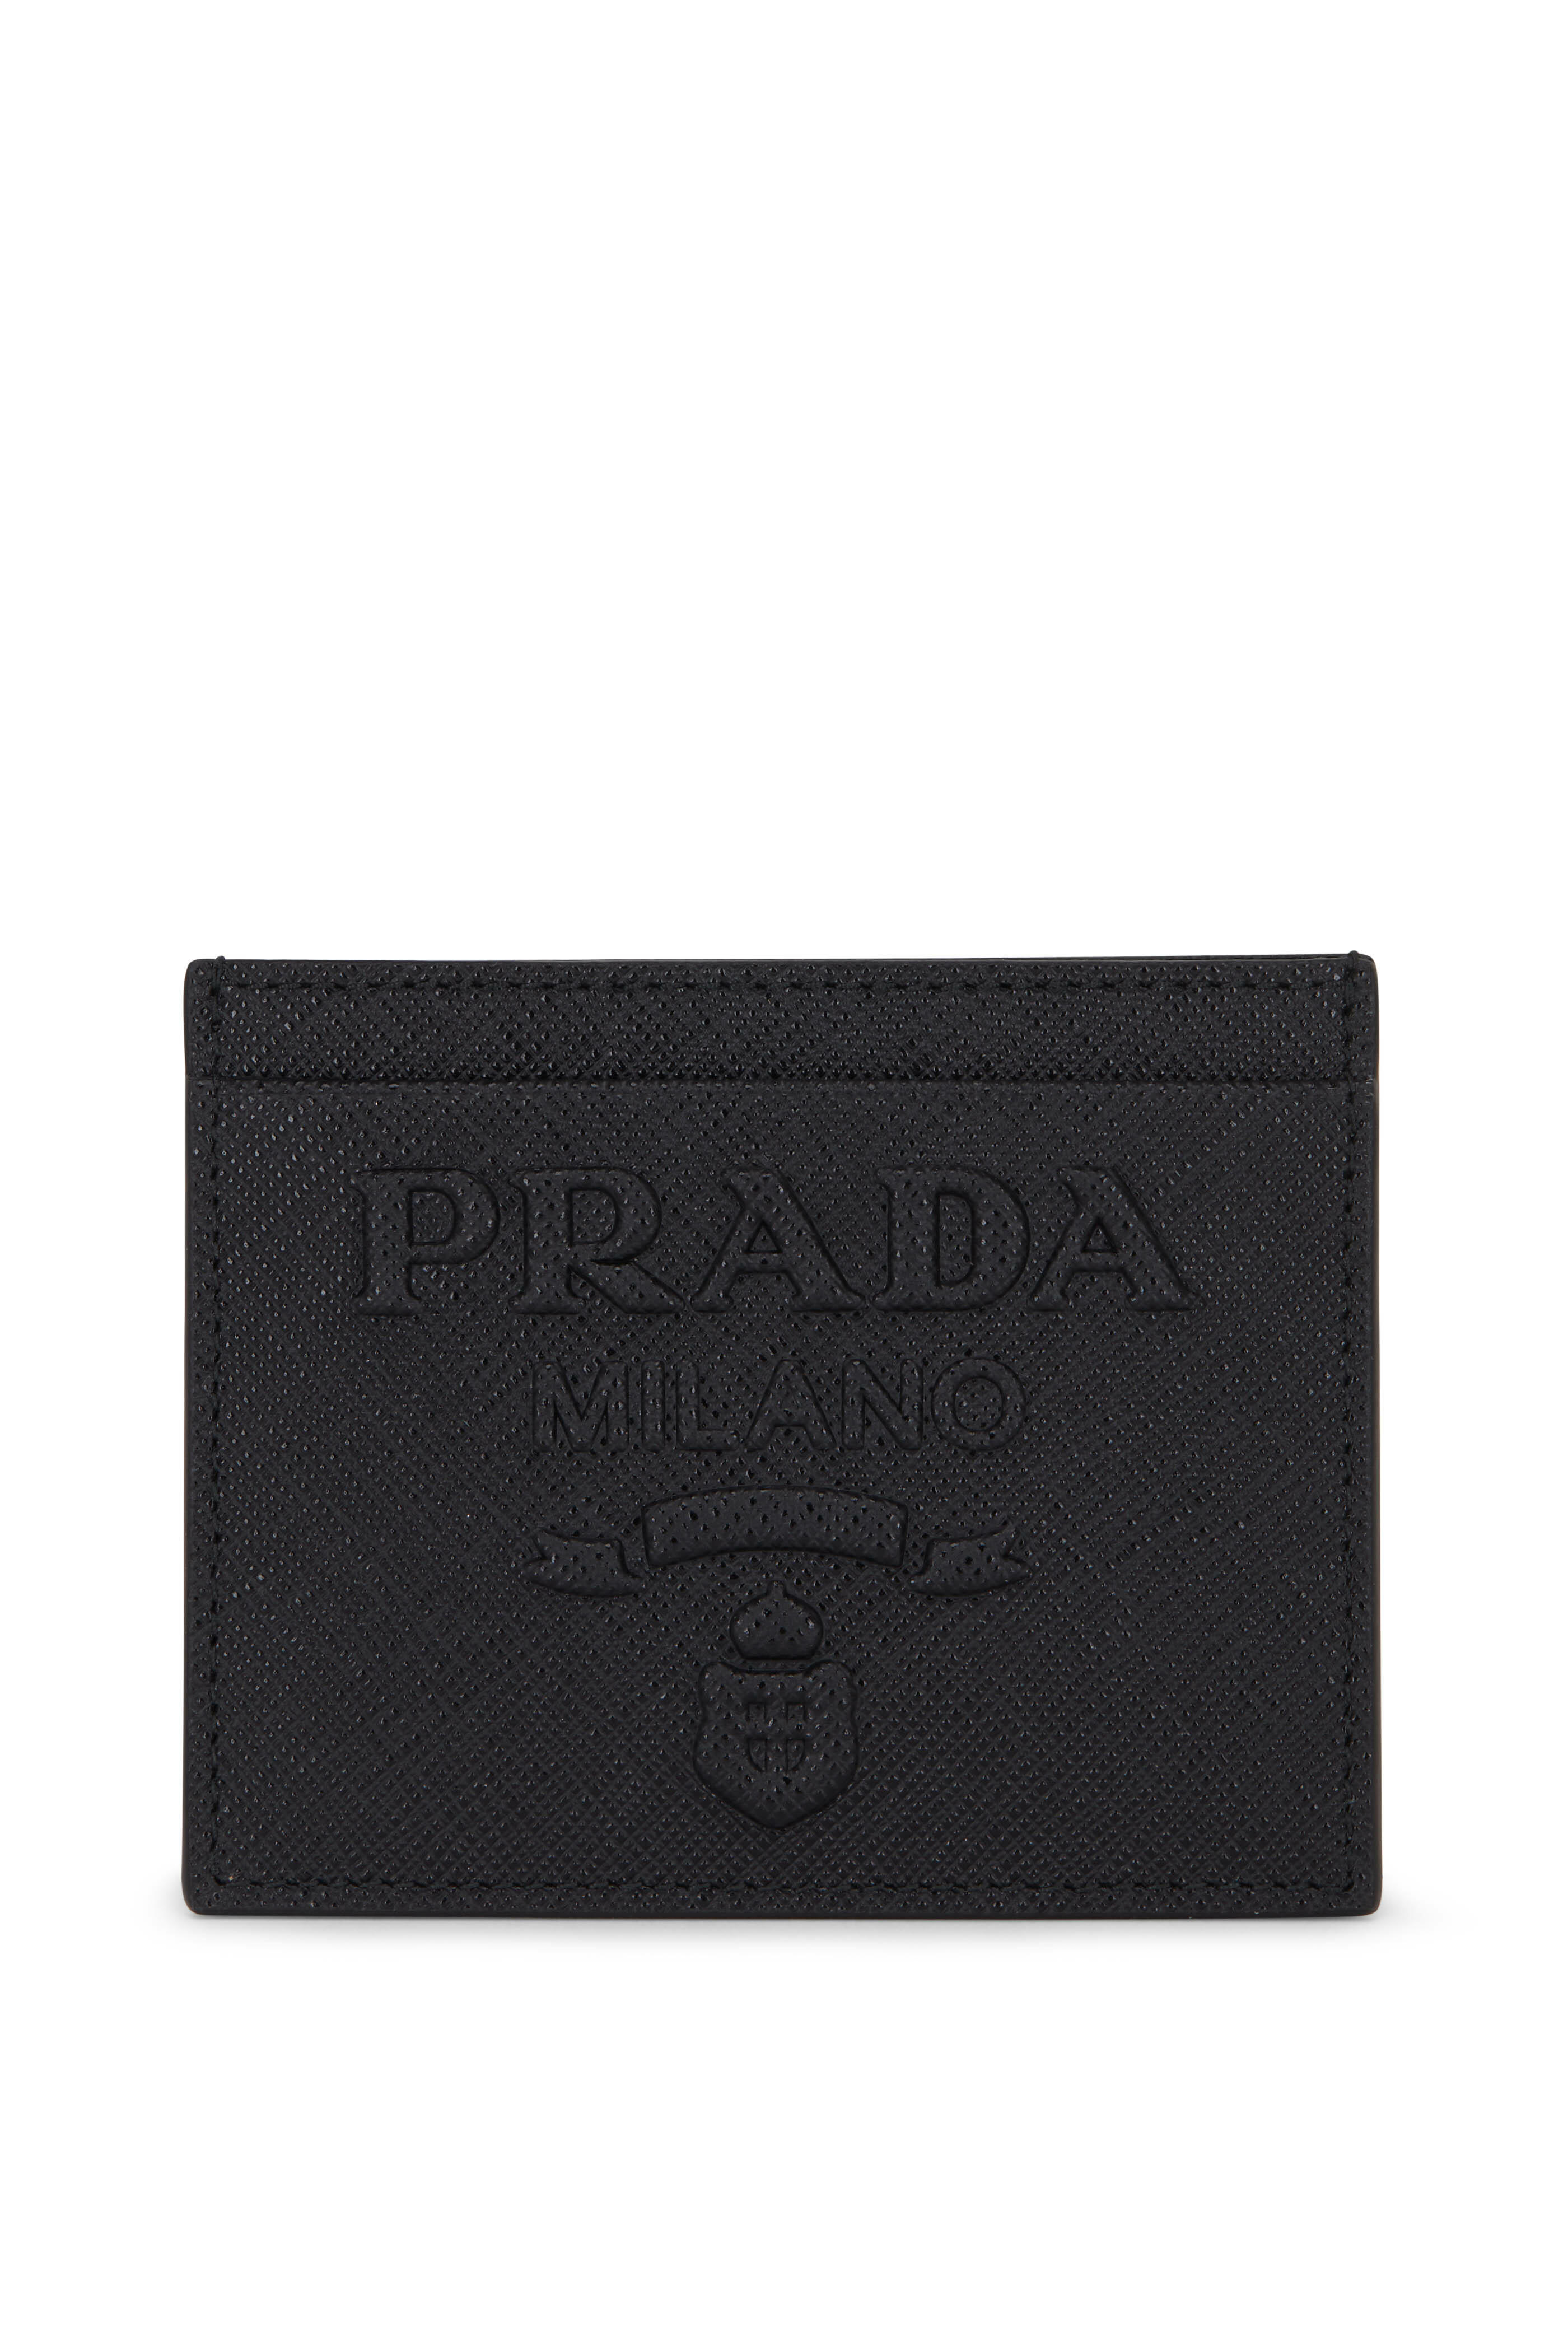 PRADA Saffiano Leather Card Holder Black